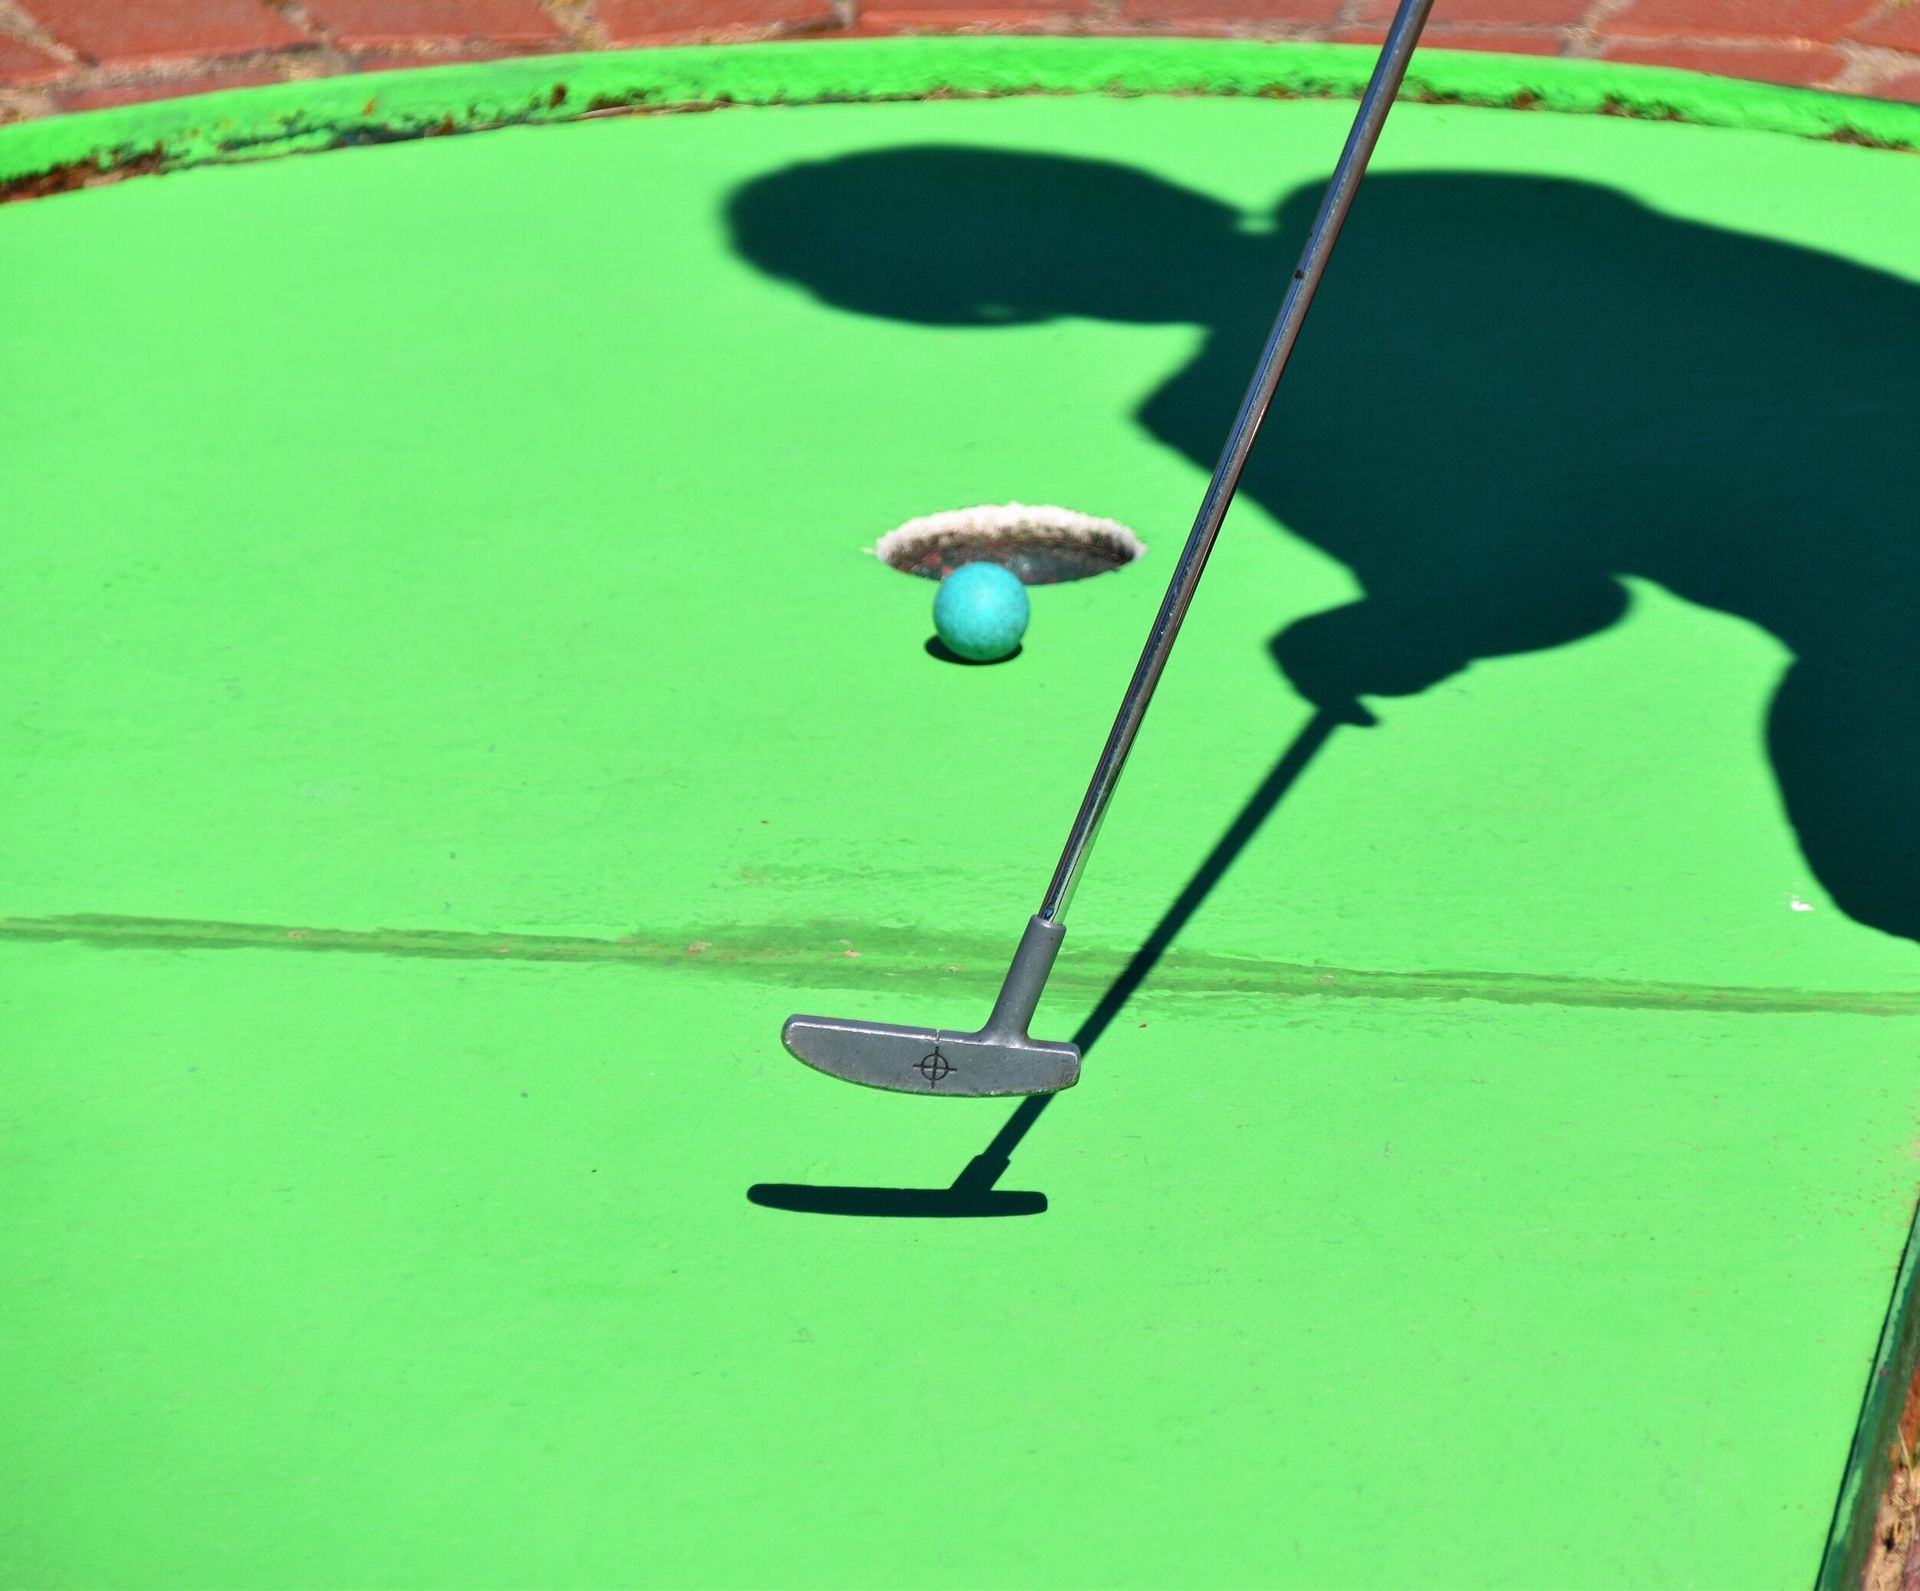 a person is putting a golf ball on a green mat